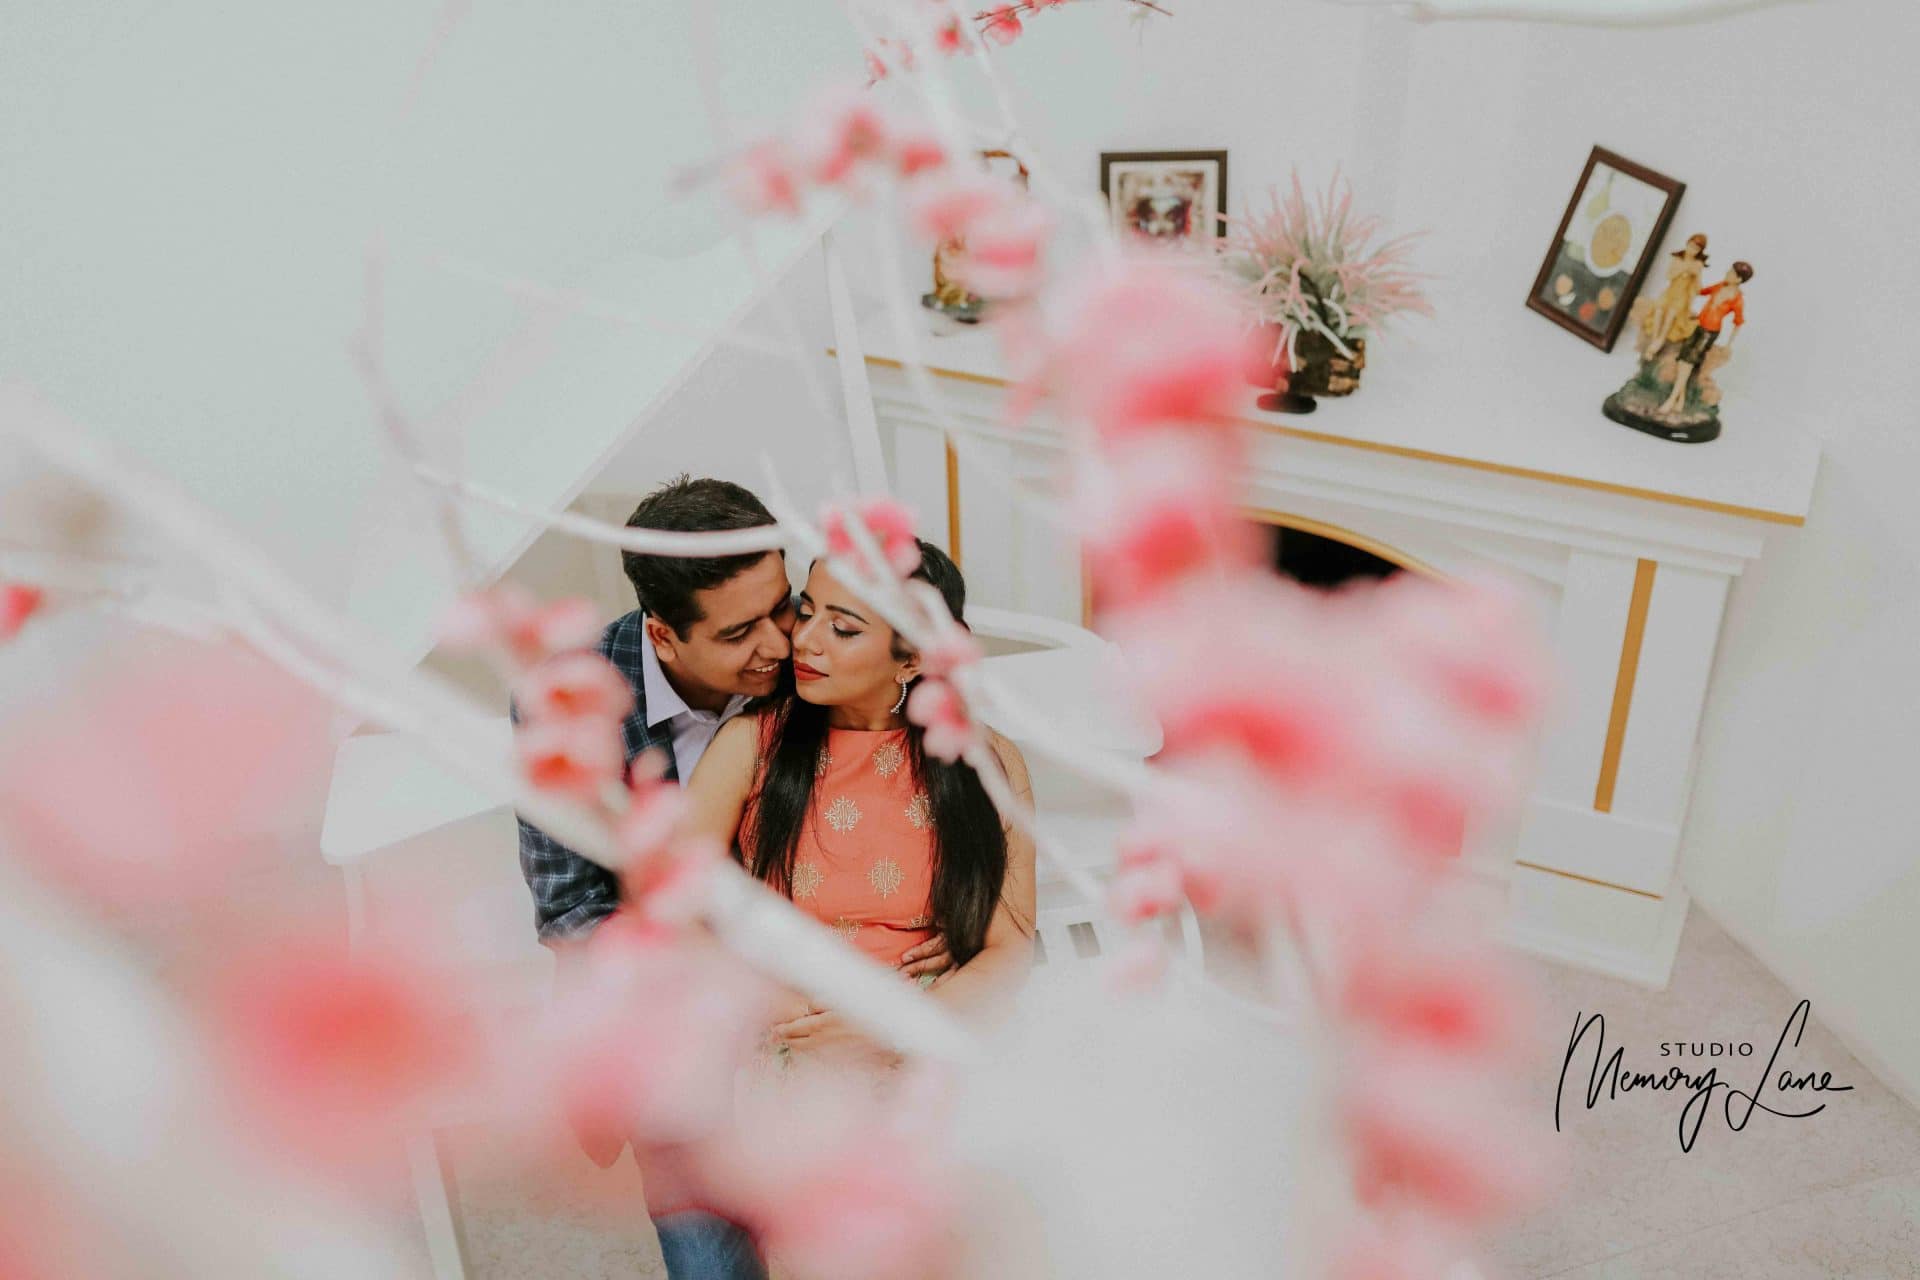 Pre-wedding photographer Nawanshahr | Capturing right moment!